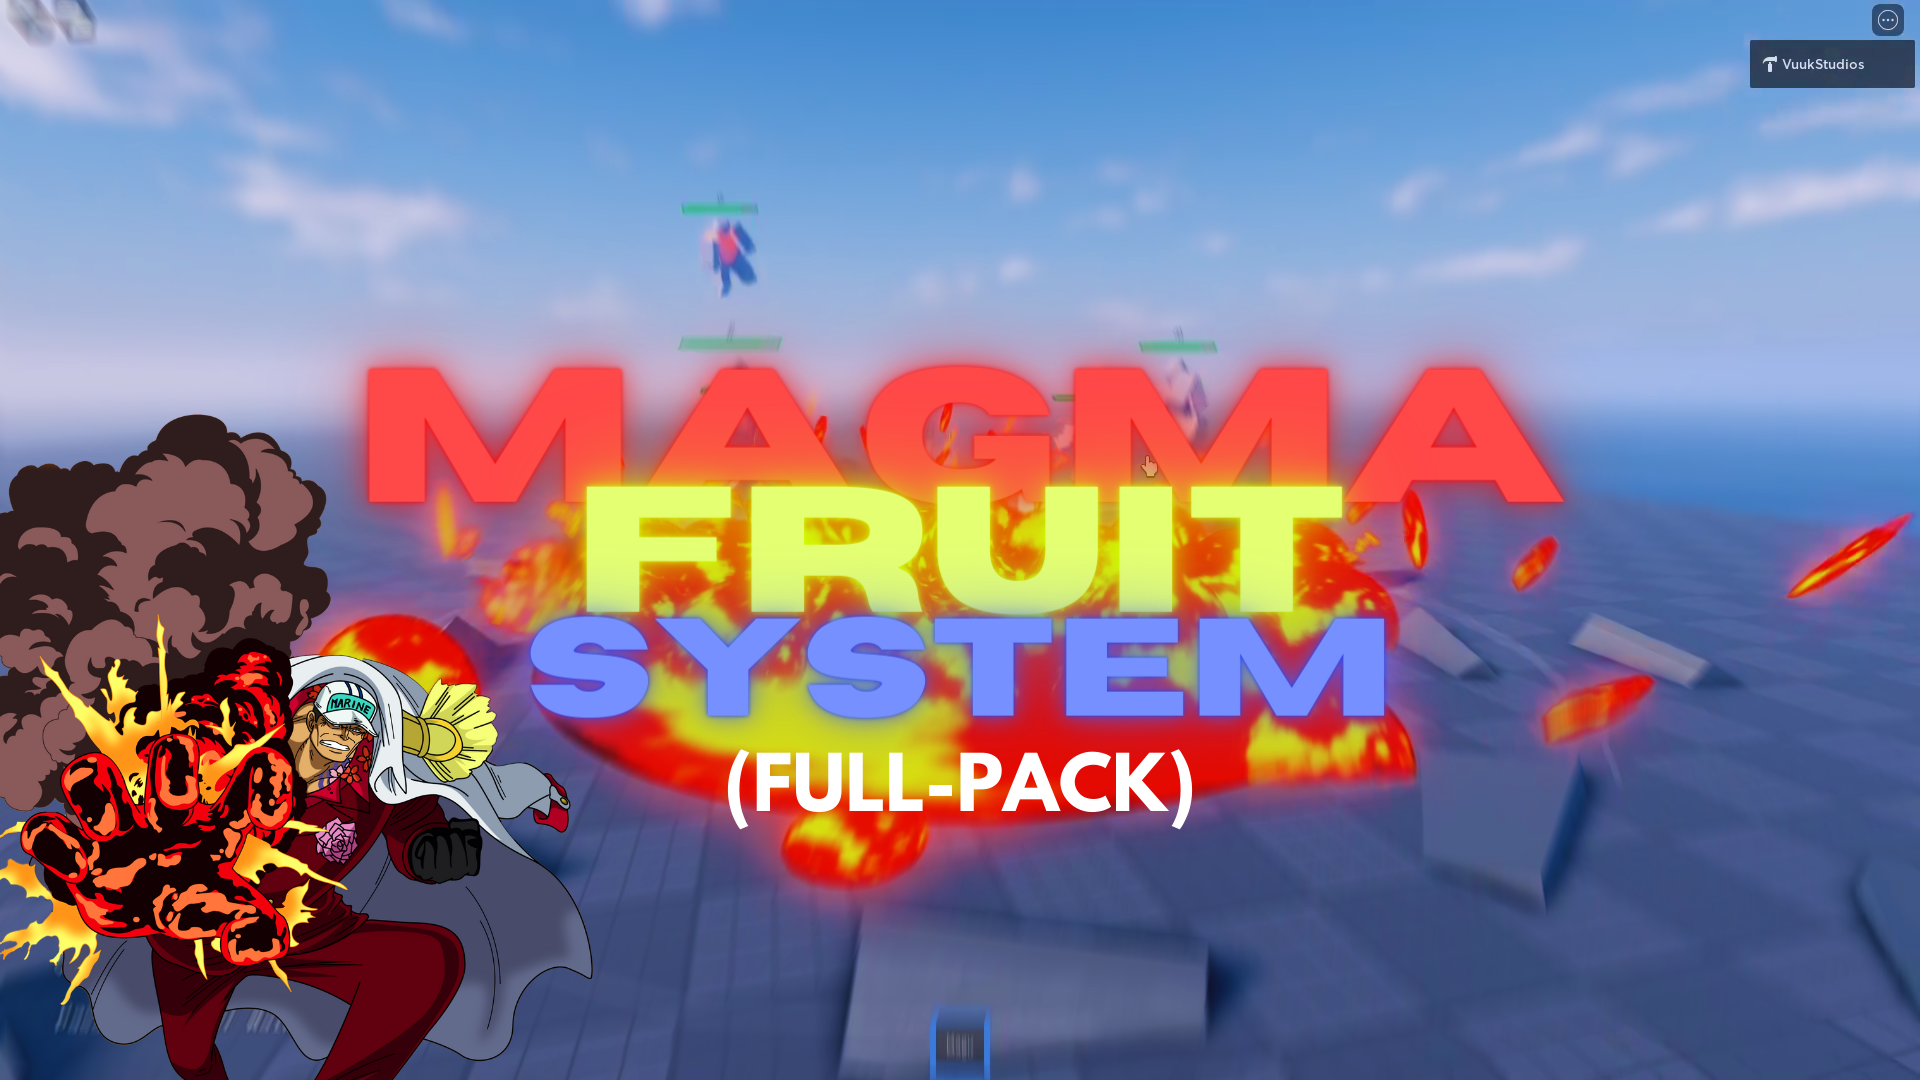 Magu magu no mi/ magma fruit